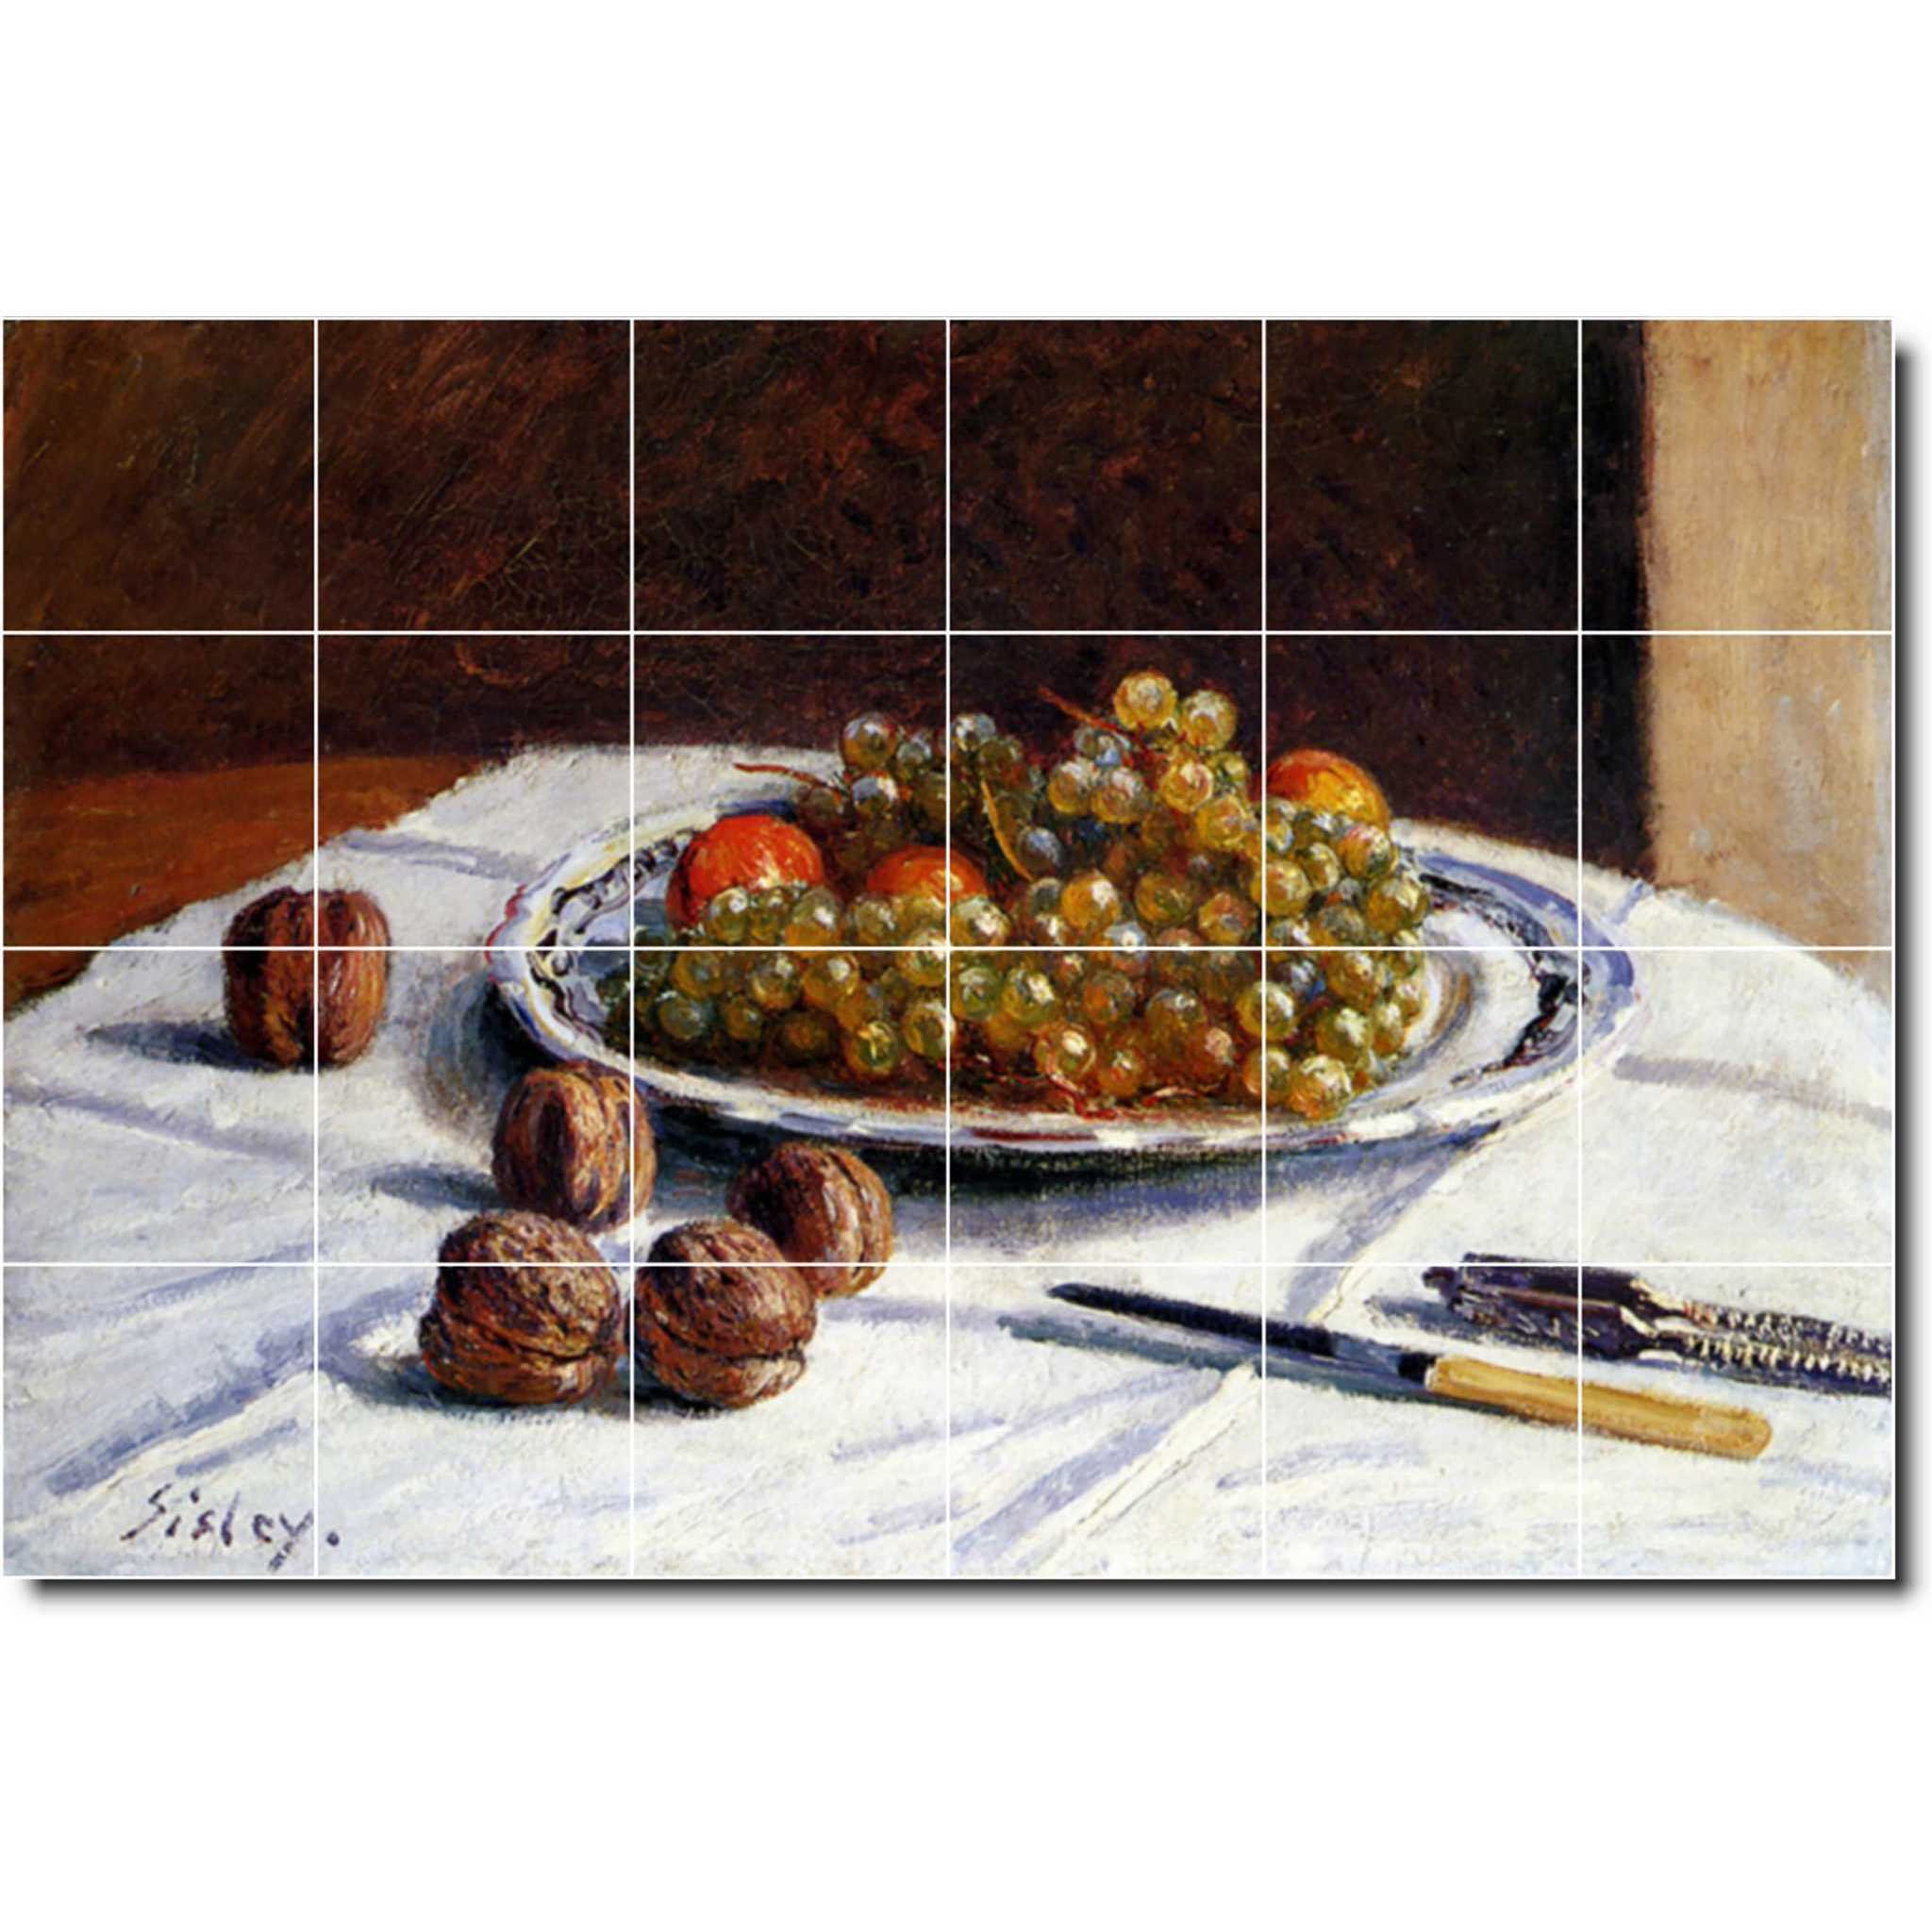 alfred sisley fruit vegetable painting ceramic tile mural p08350